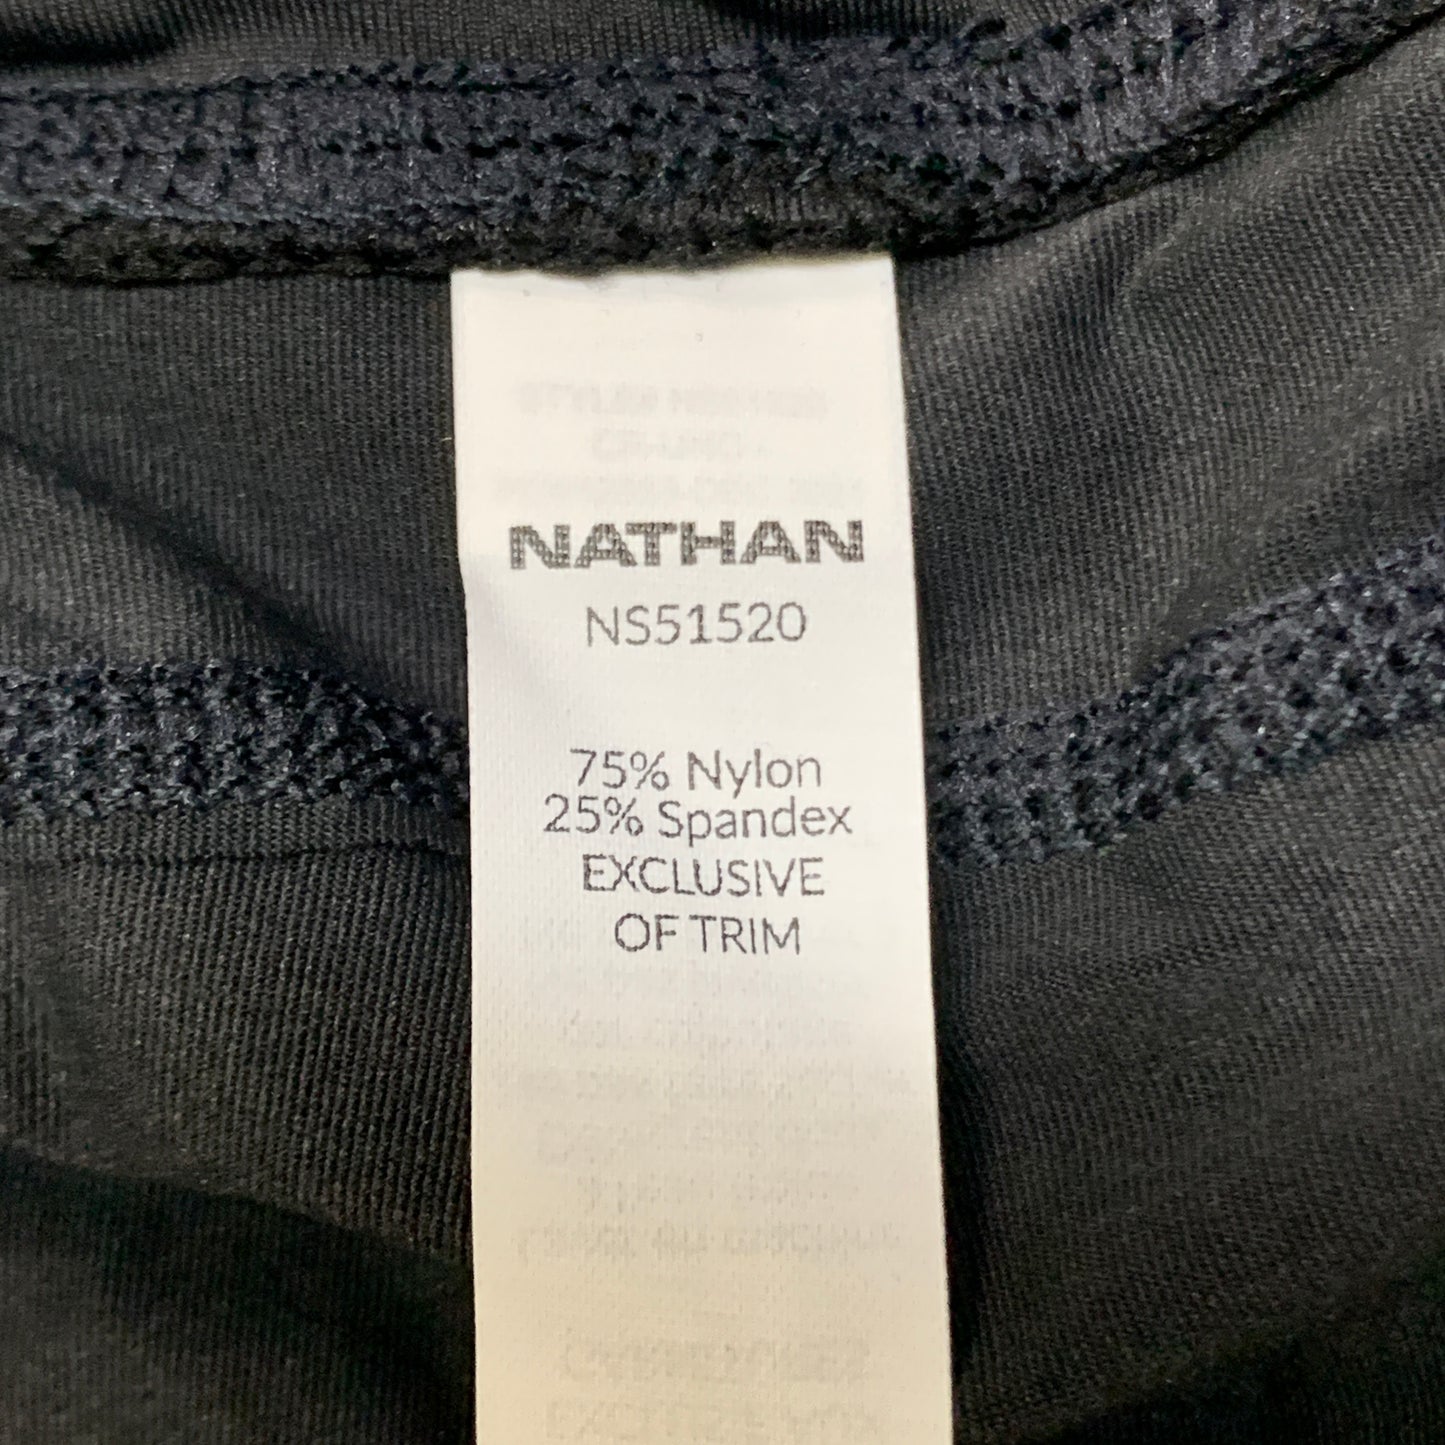 NATHAN Interval 6" Inseam Bike Short Women's Black Size S NS51520-00001-S